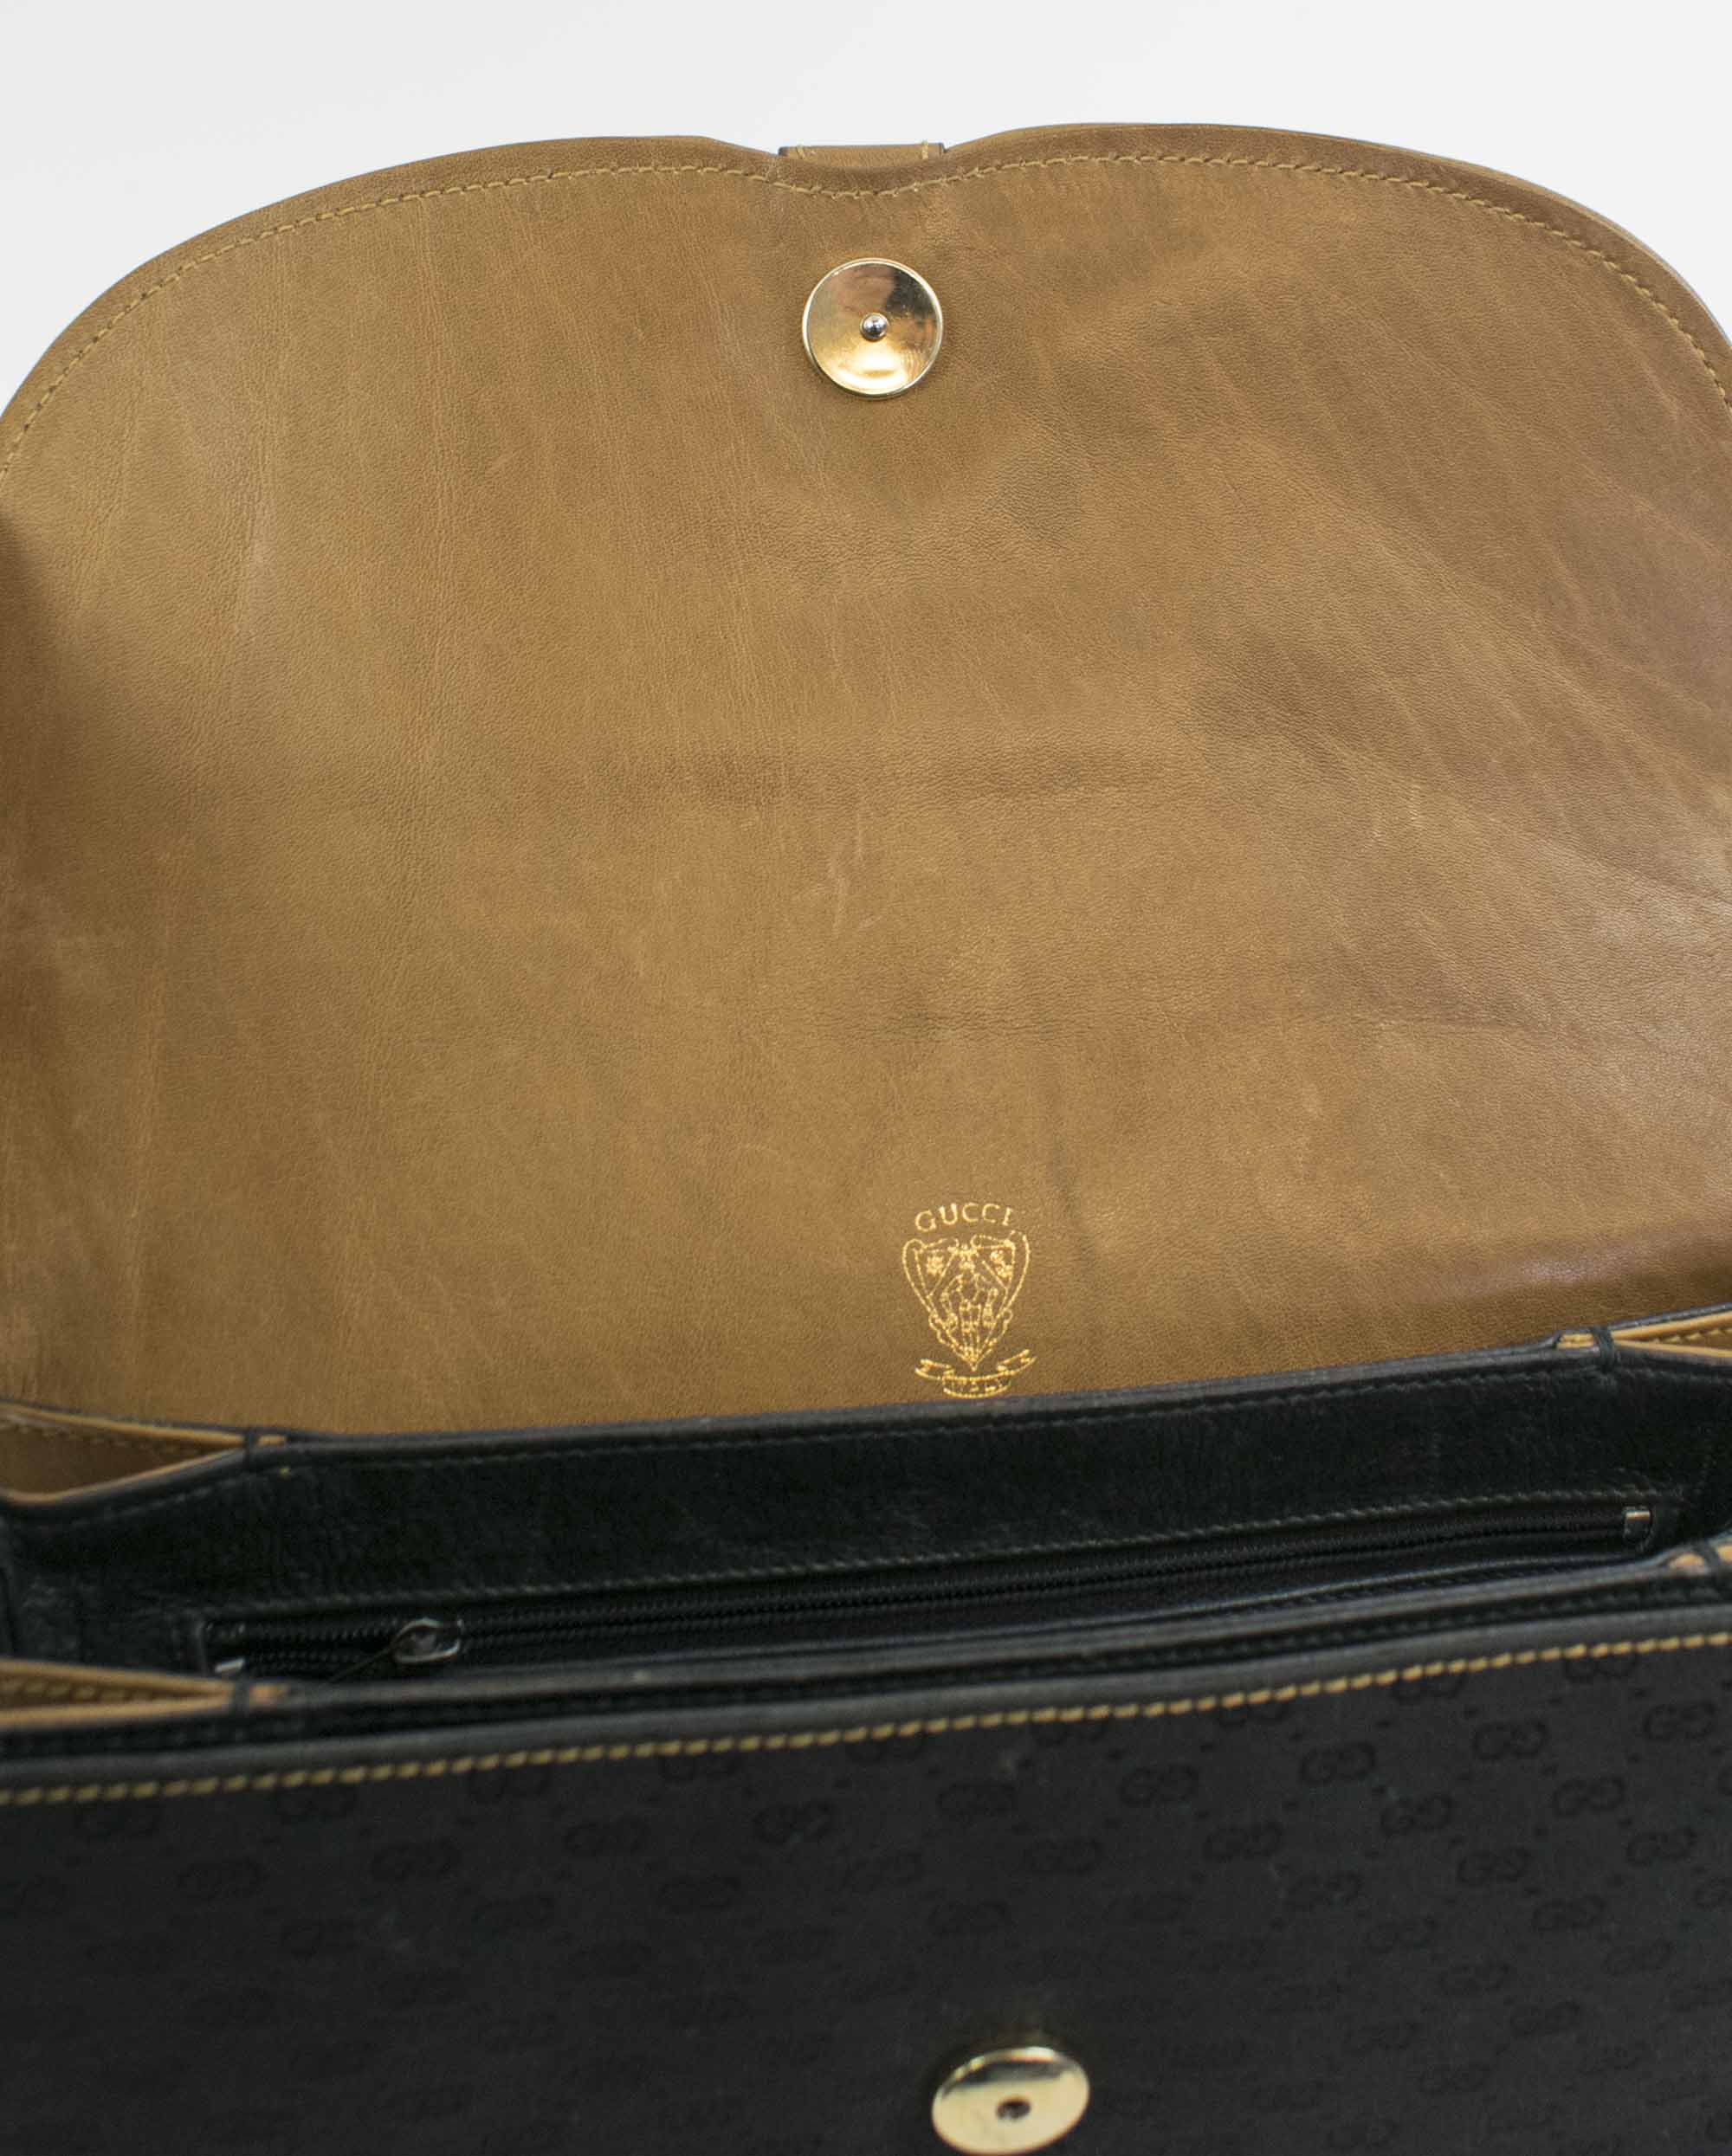 Sold at Auction: VINTAGE GUCCI LOGO MONOGRAM HOBO SHAPED BAG PURSE